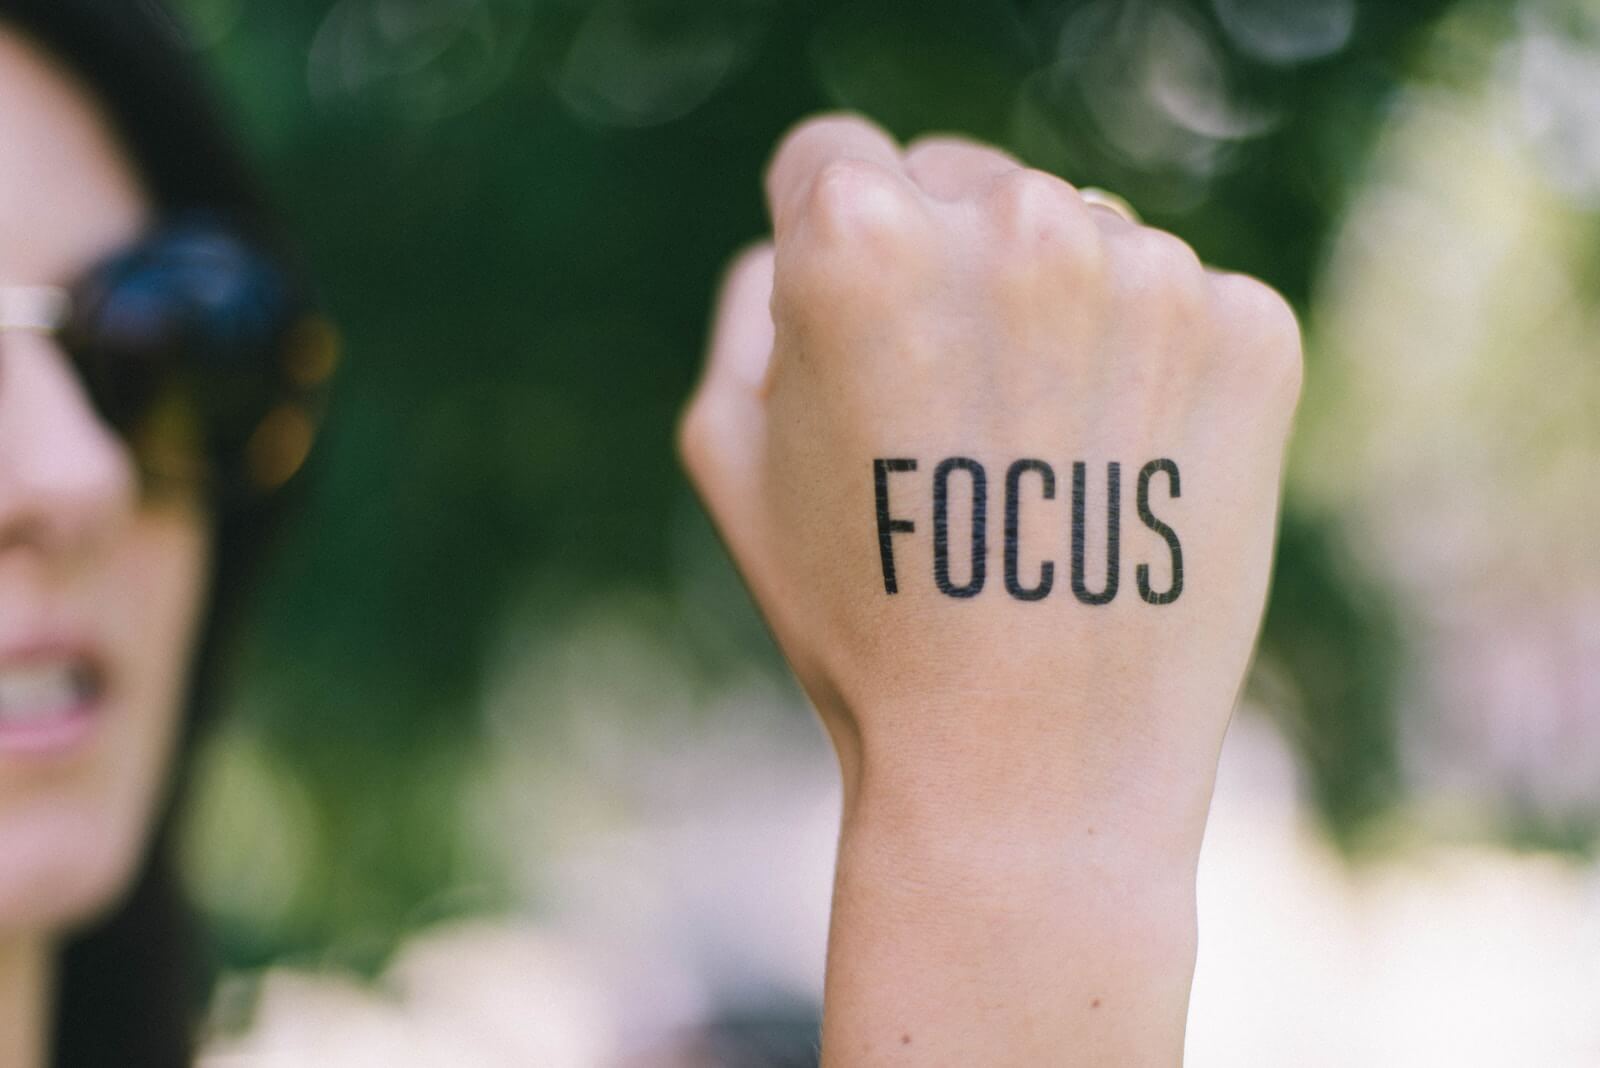 "Focus" written on a fist